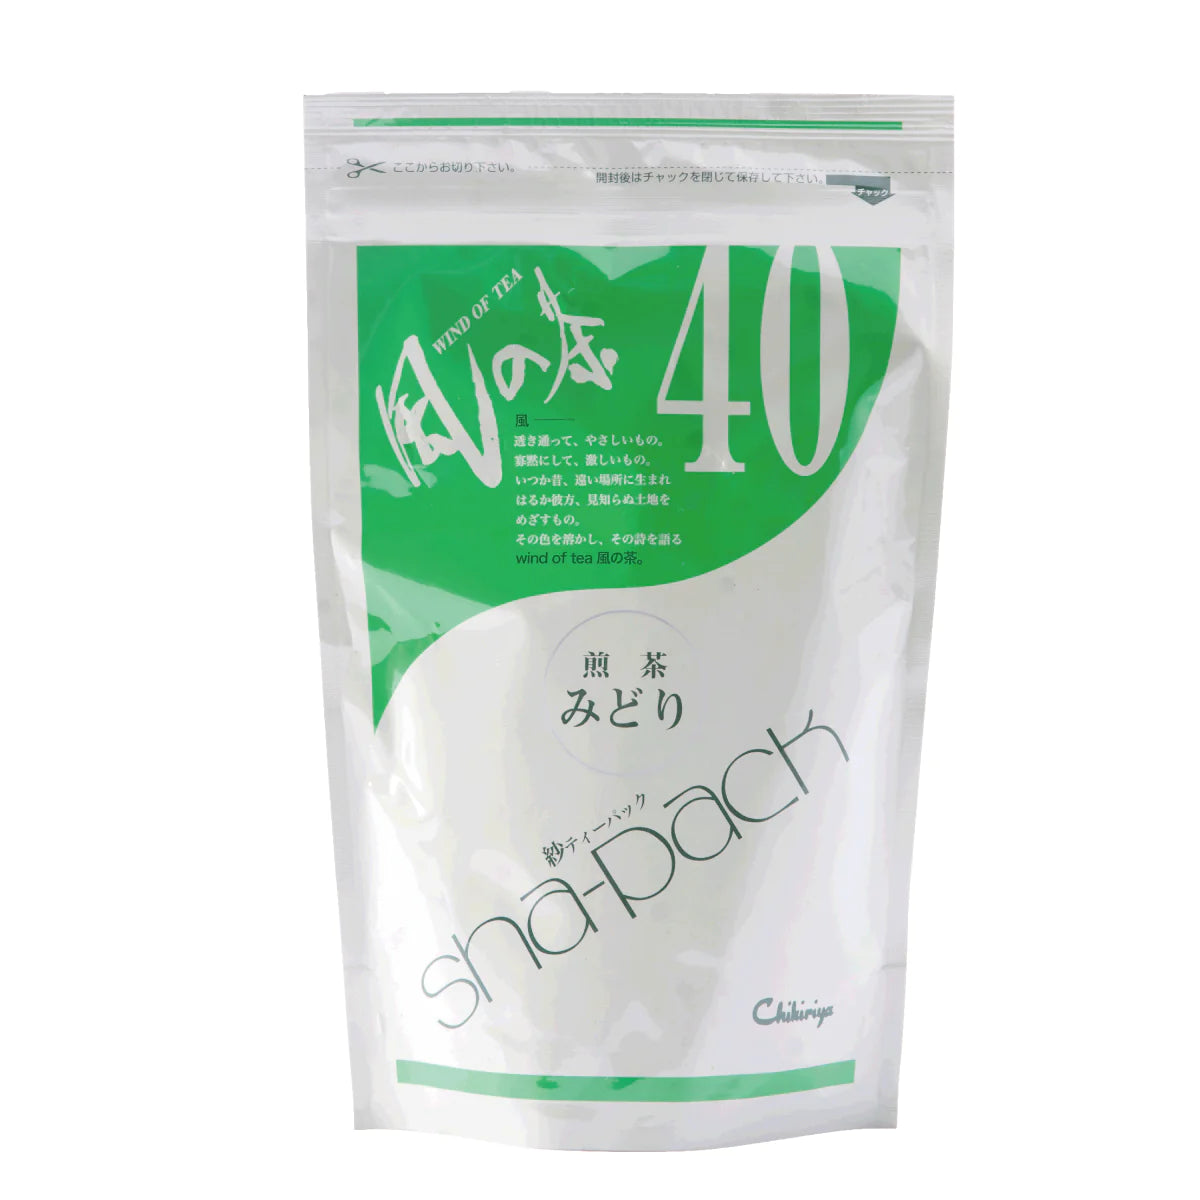 Sencha "Midori" (Japanese green tea) – 5g x 40 Tea bags